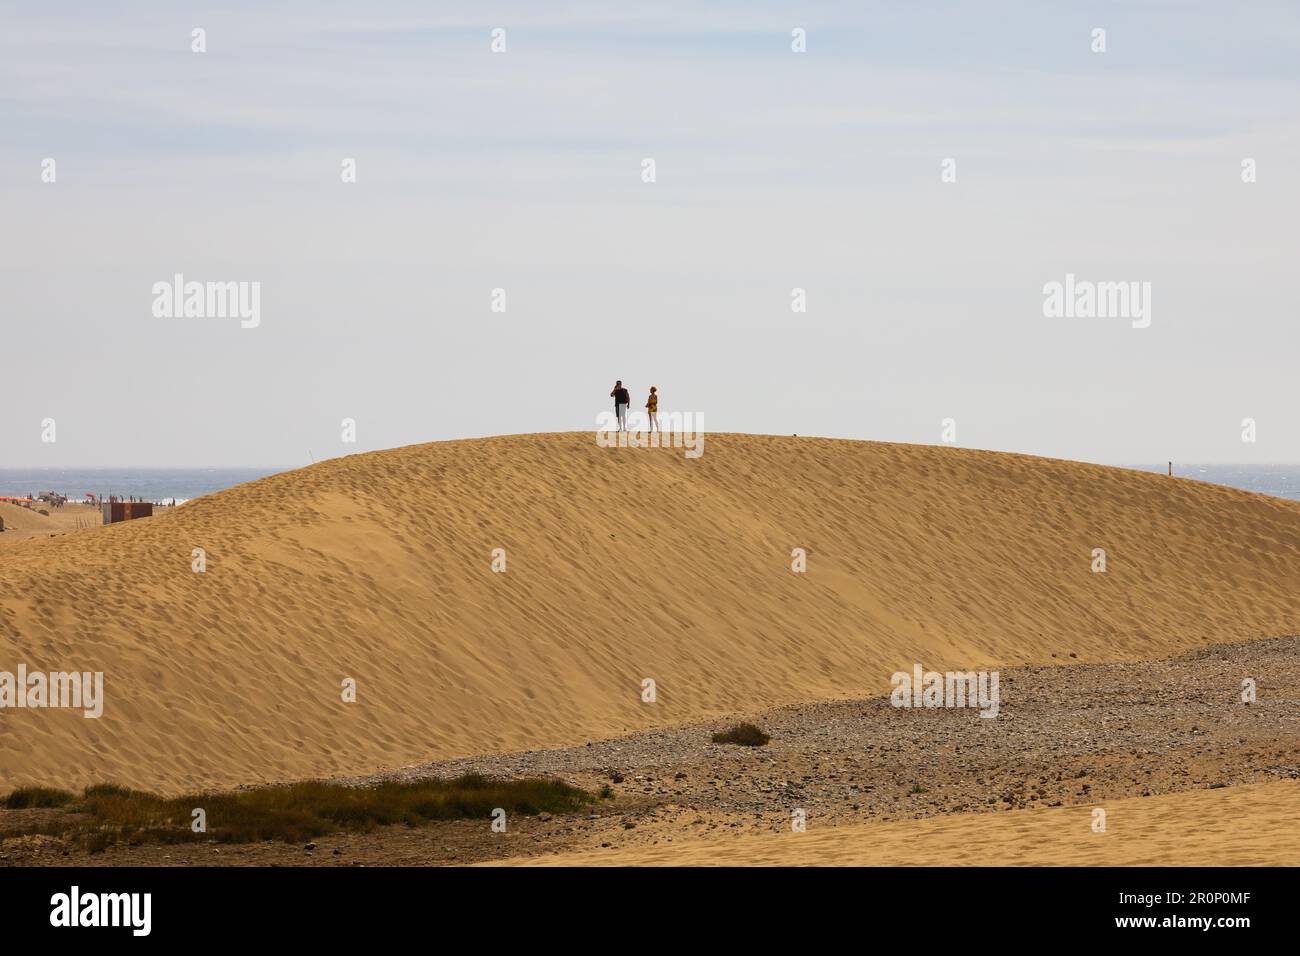 Tourists on the sand at the Dunes at Maspalomas, Dunas de Maspalomas, Las Palmas, Gran Canaria, Spain Stock Photo